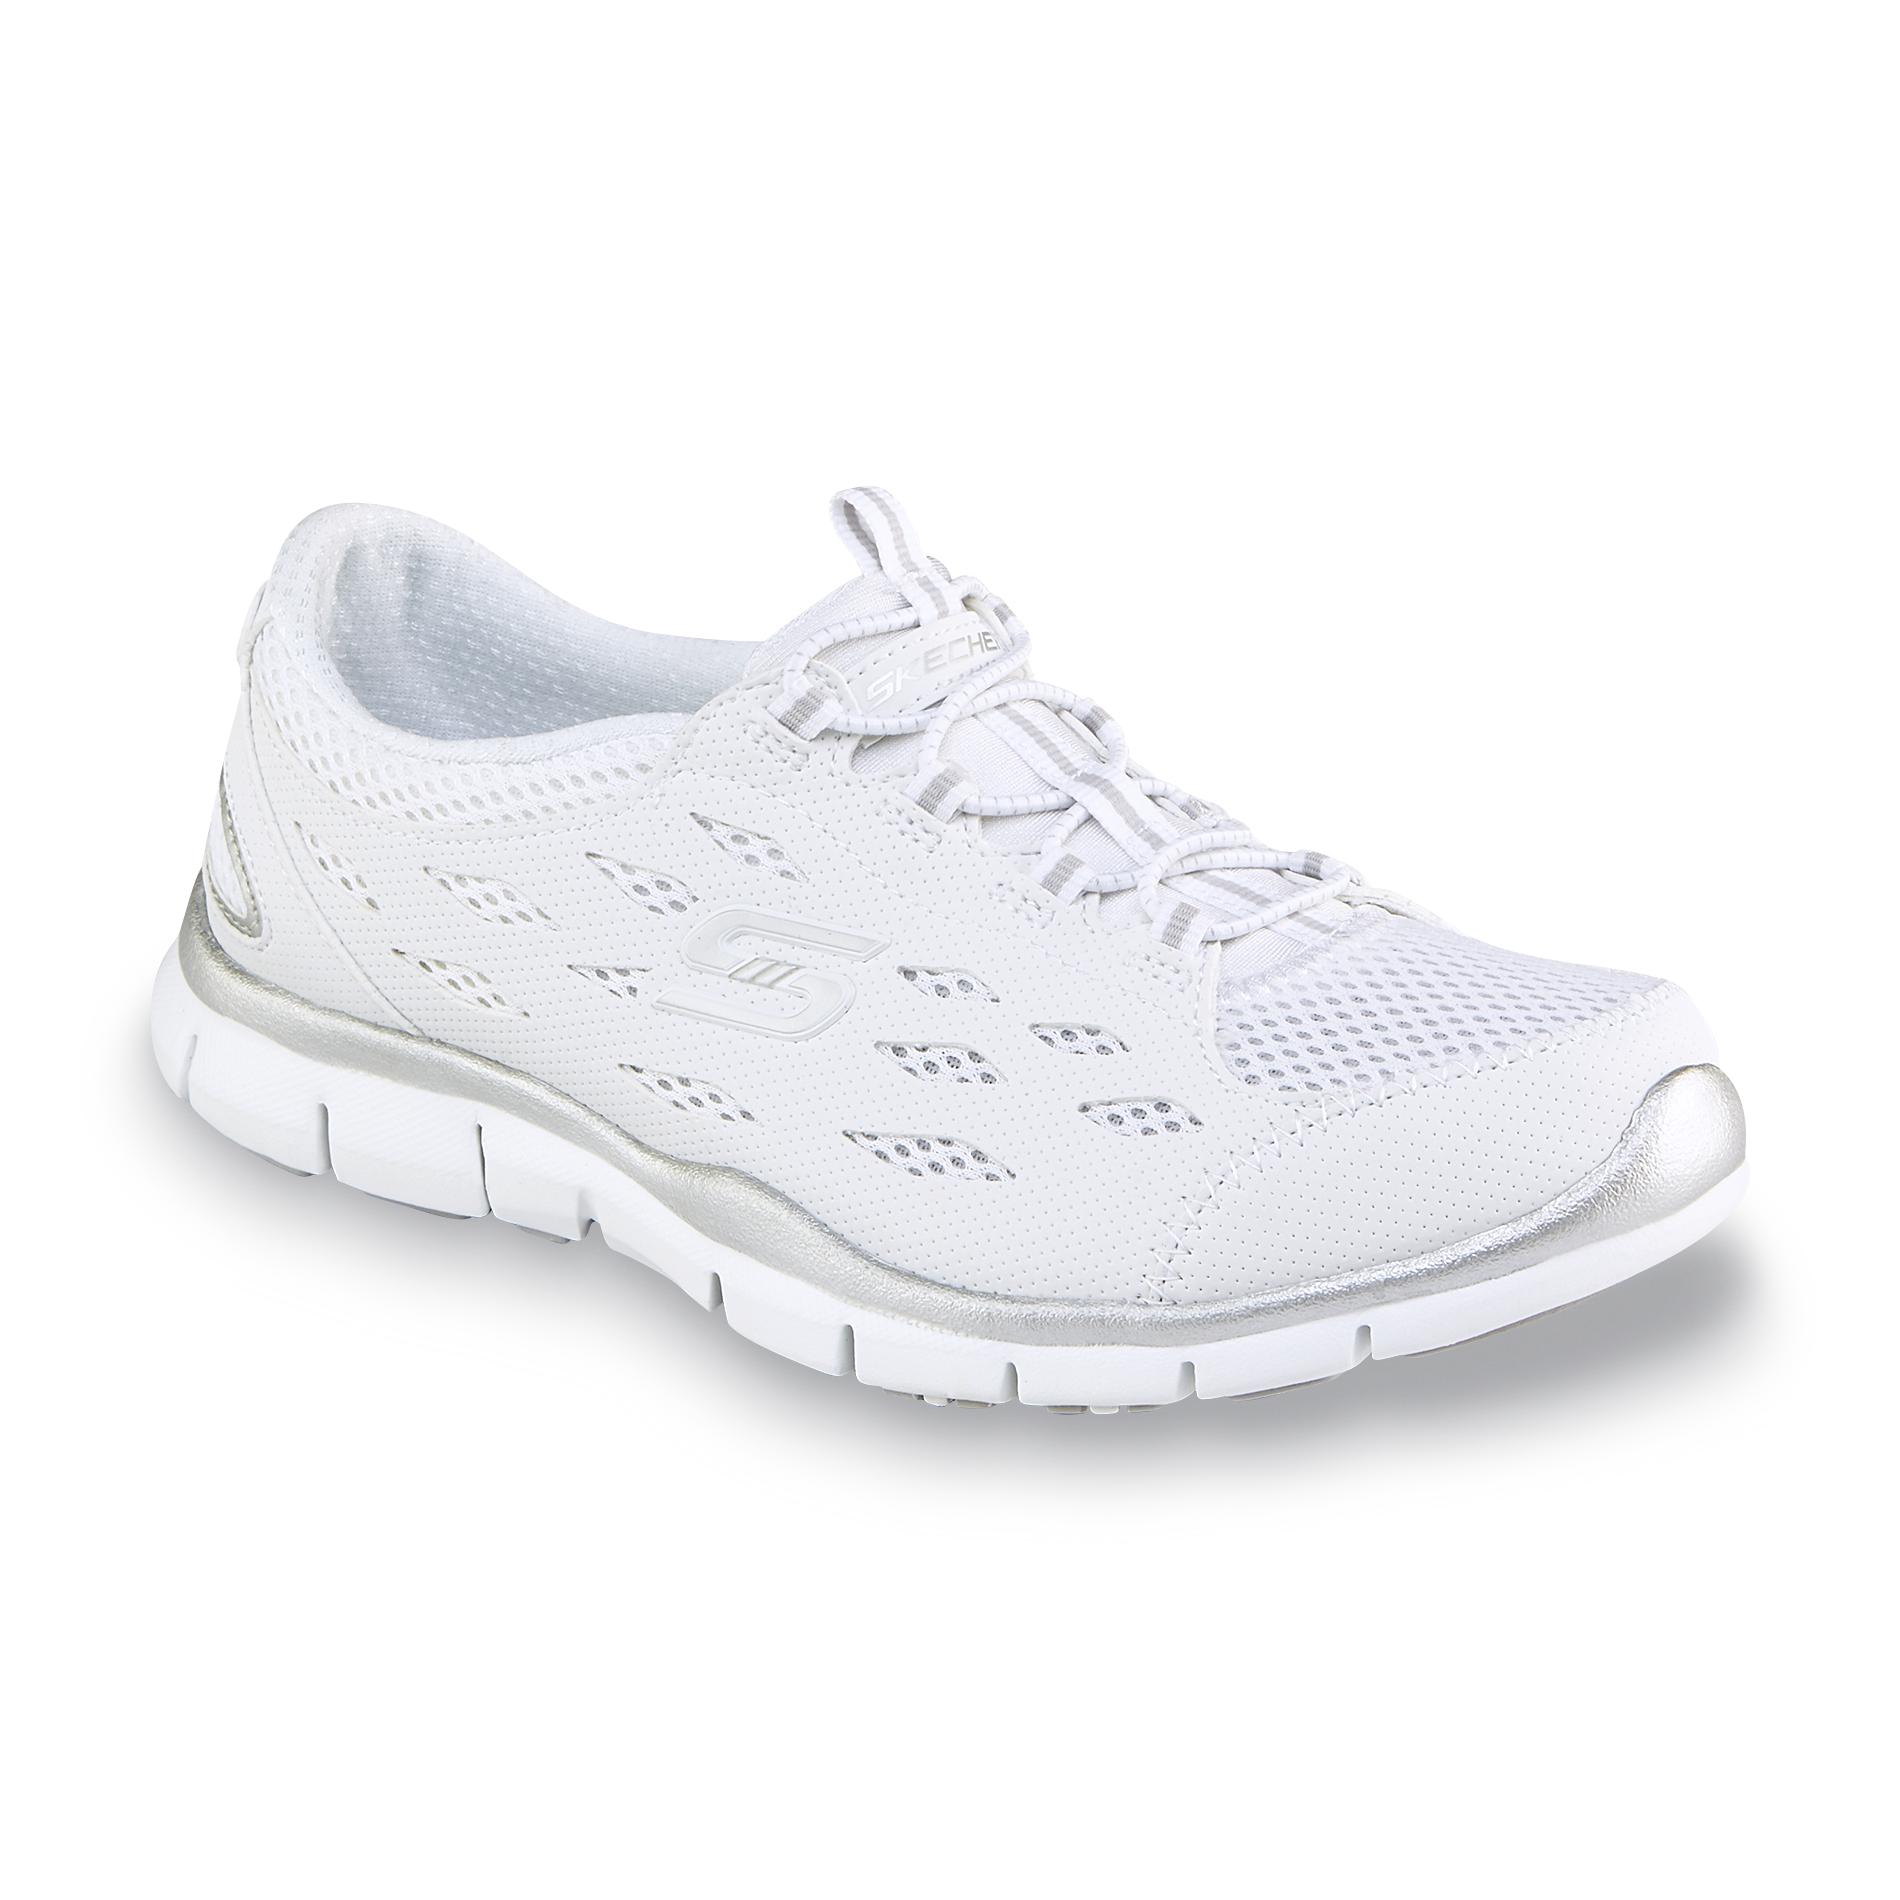 sketchers white tennis shoes